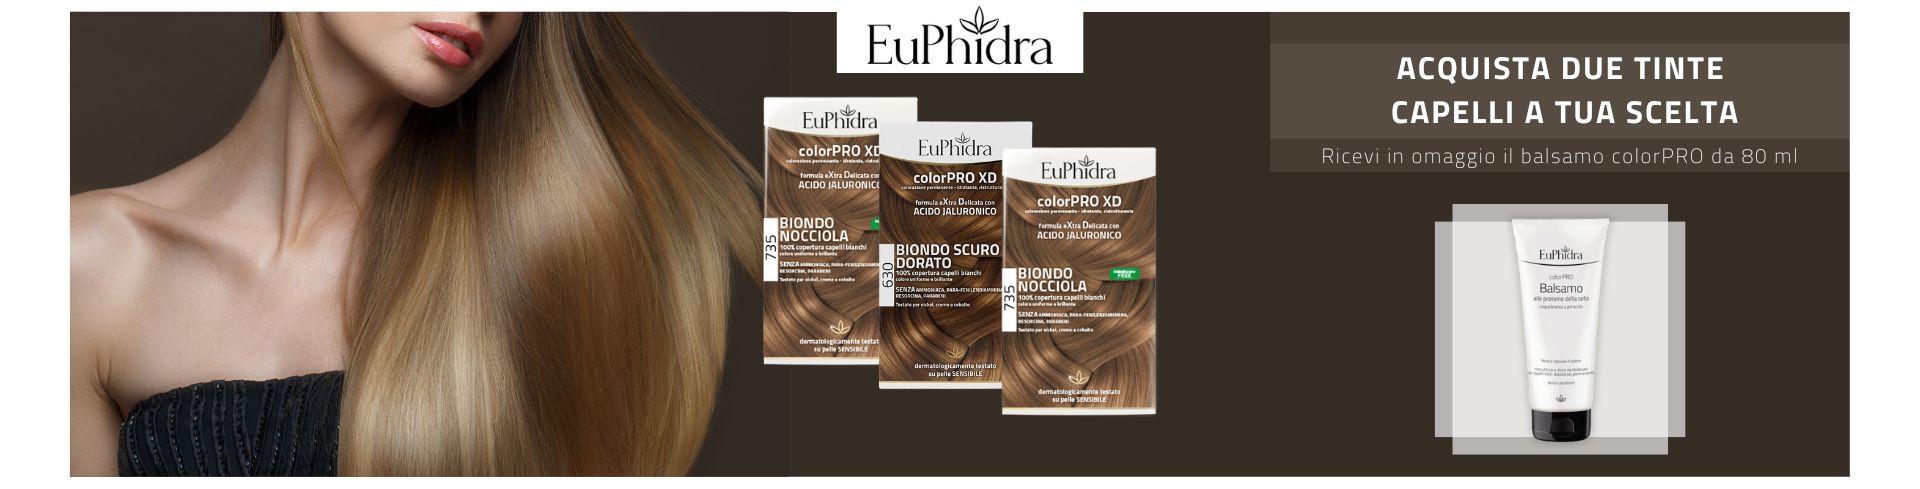 banner promozionale euphidra colorPRO  desktop